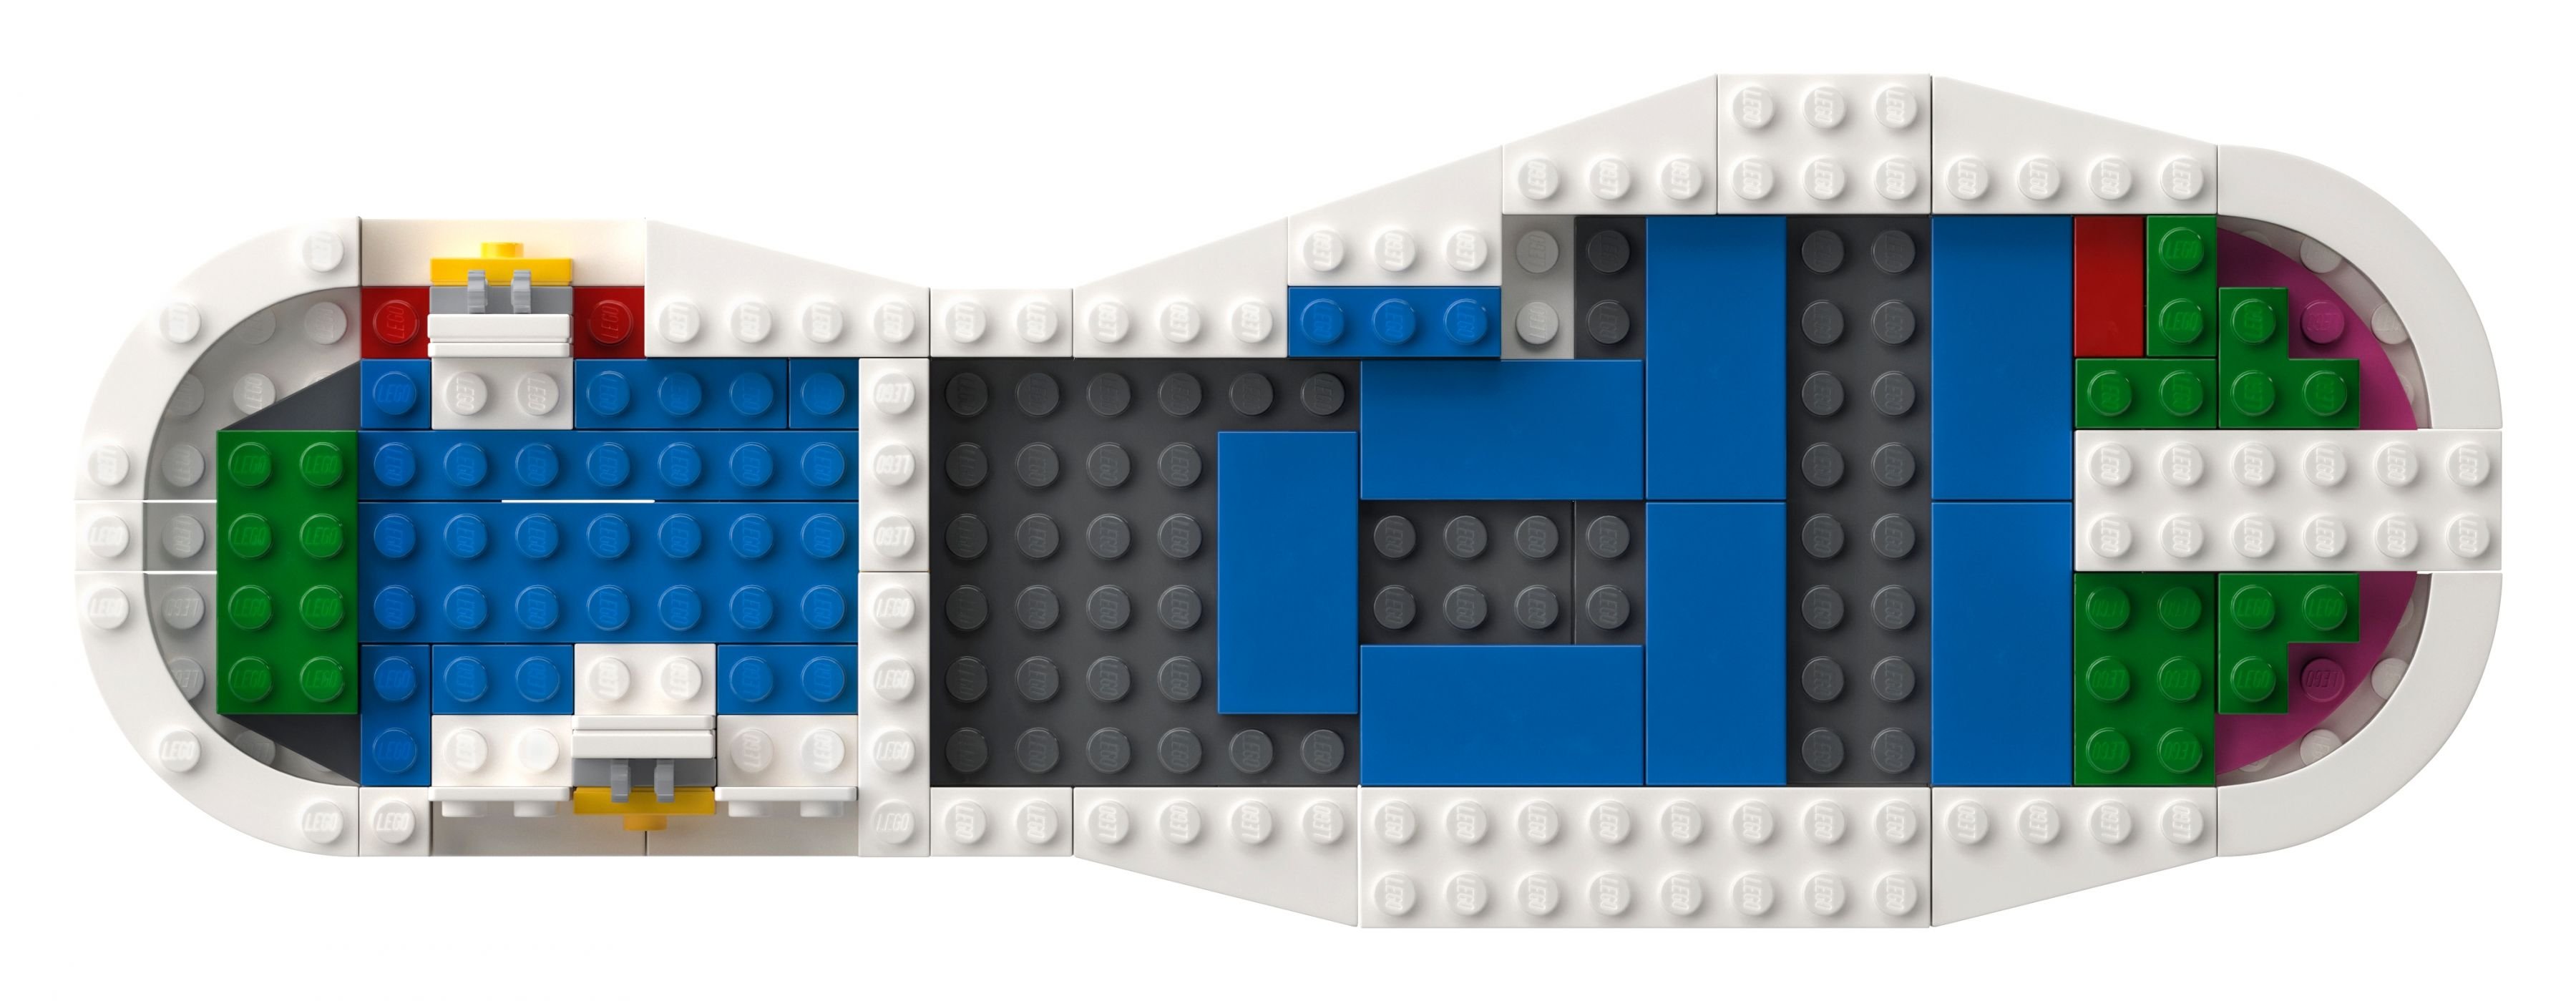 LEGO Advanced Models 10282 adidas Originals Superstar LEGO_10282_alt4.jpg